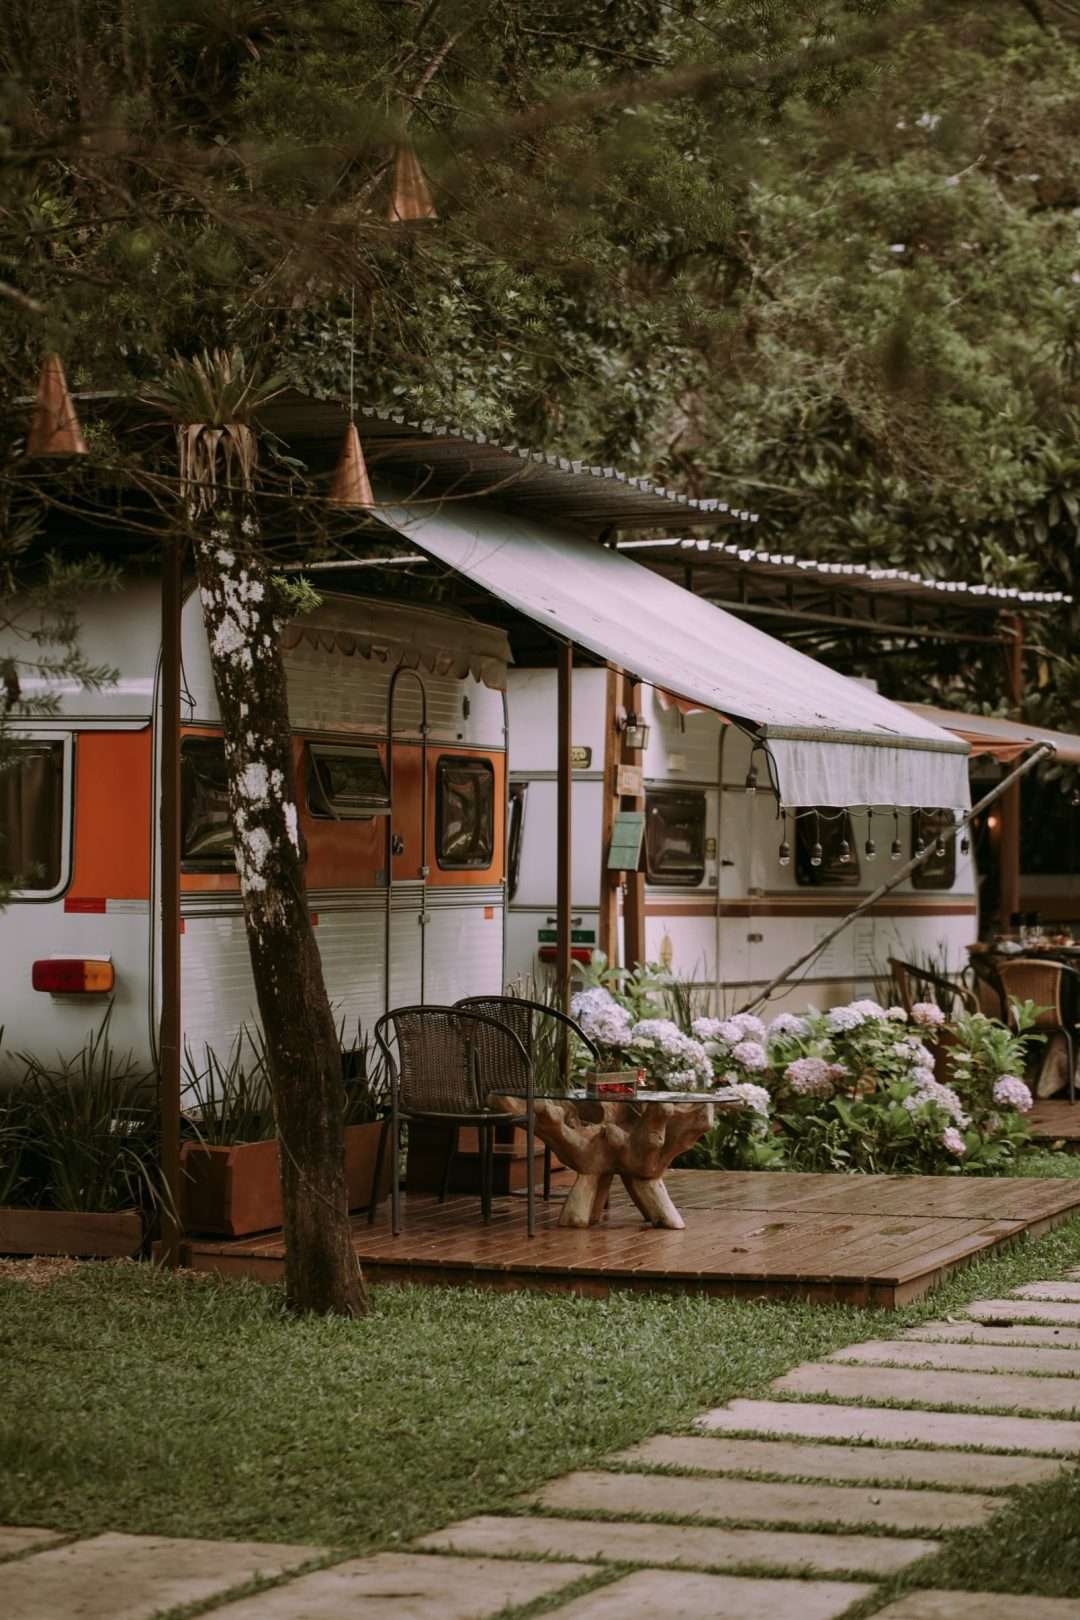 vermont caravan camping spot in nature